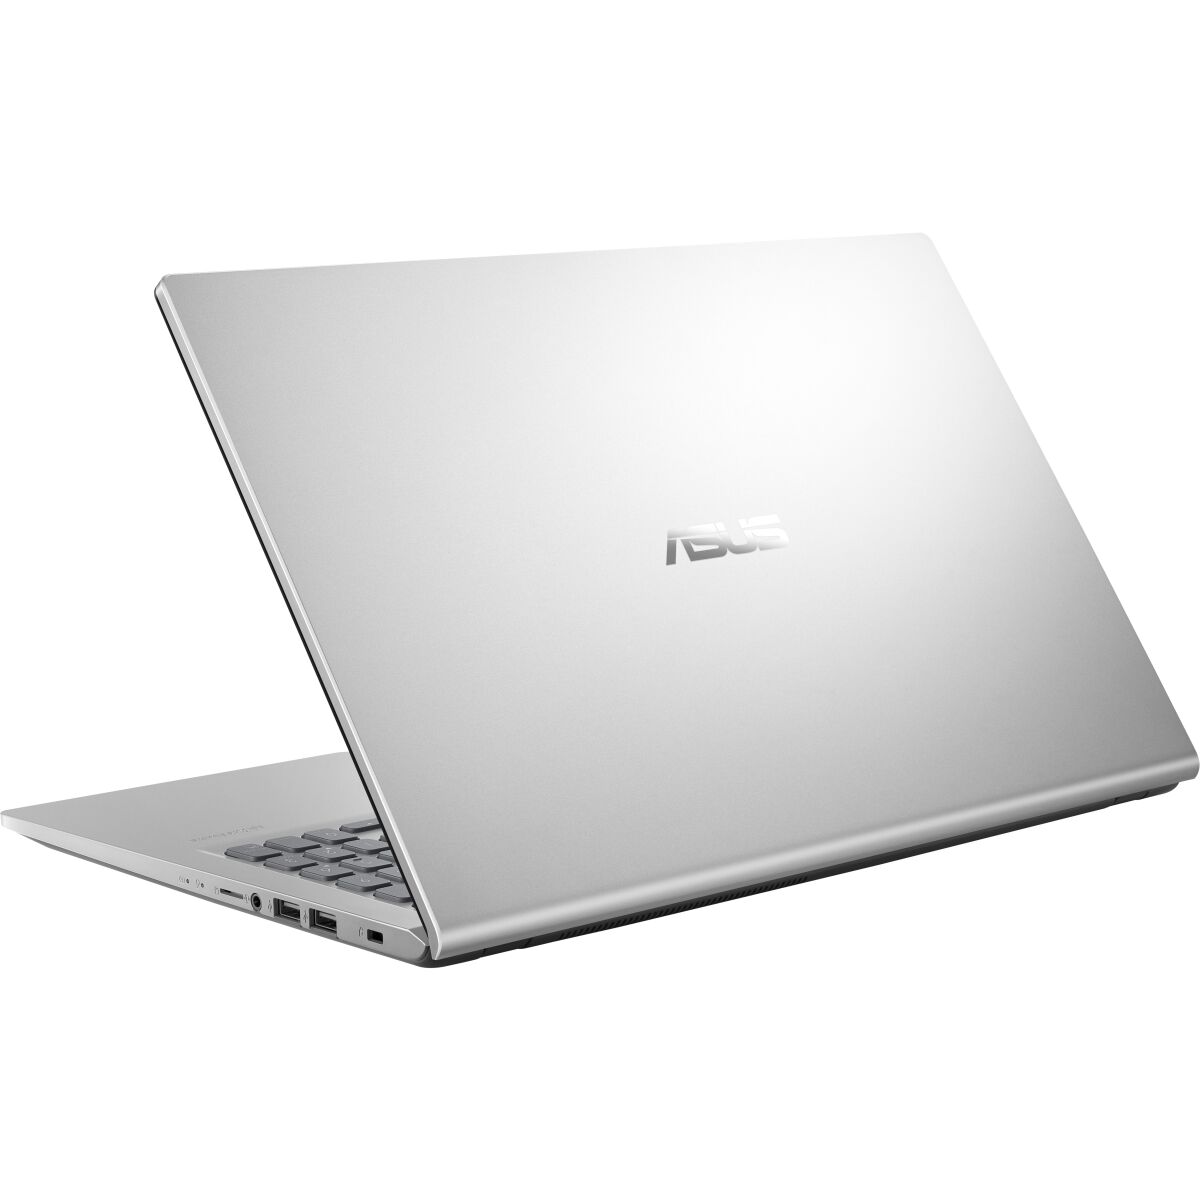 Asus Vivobook F515ja Br925t 90nb0sr2 M18550 Laptop Specifications